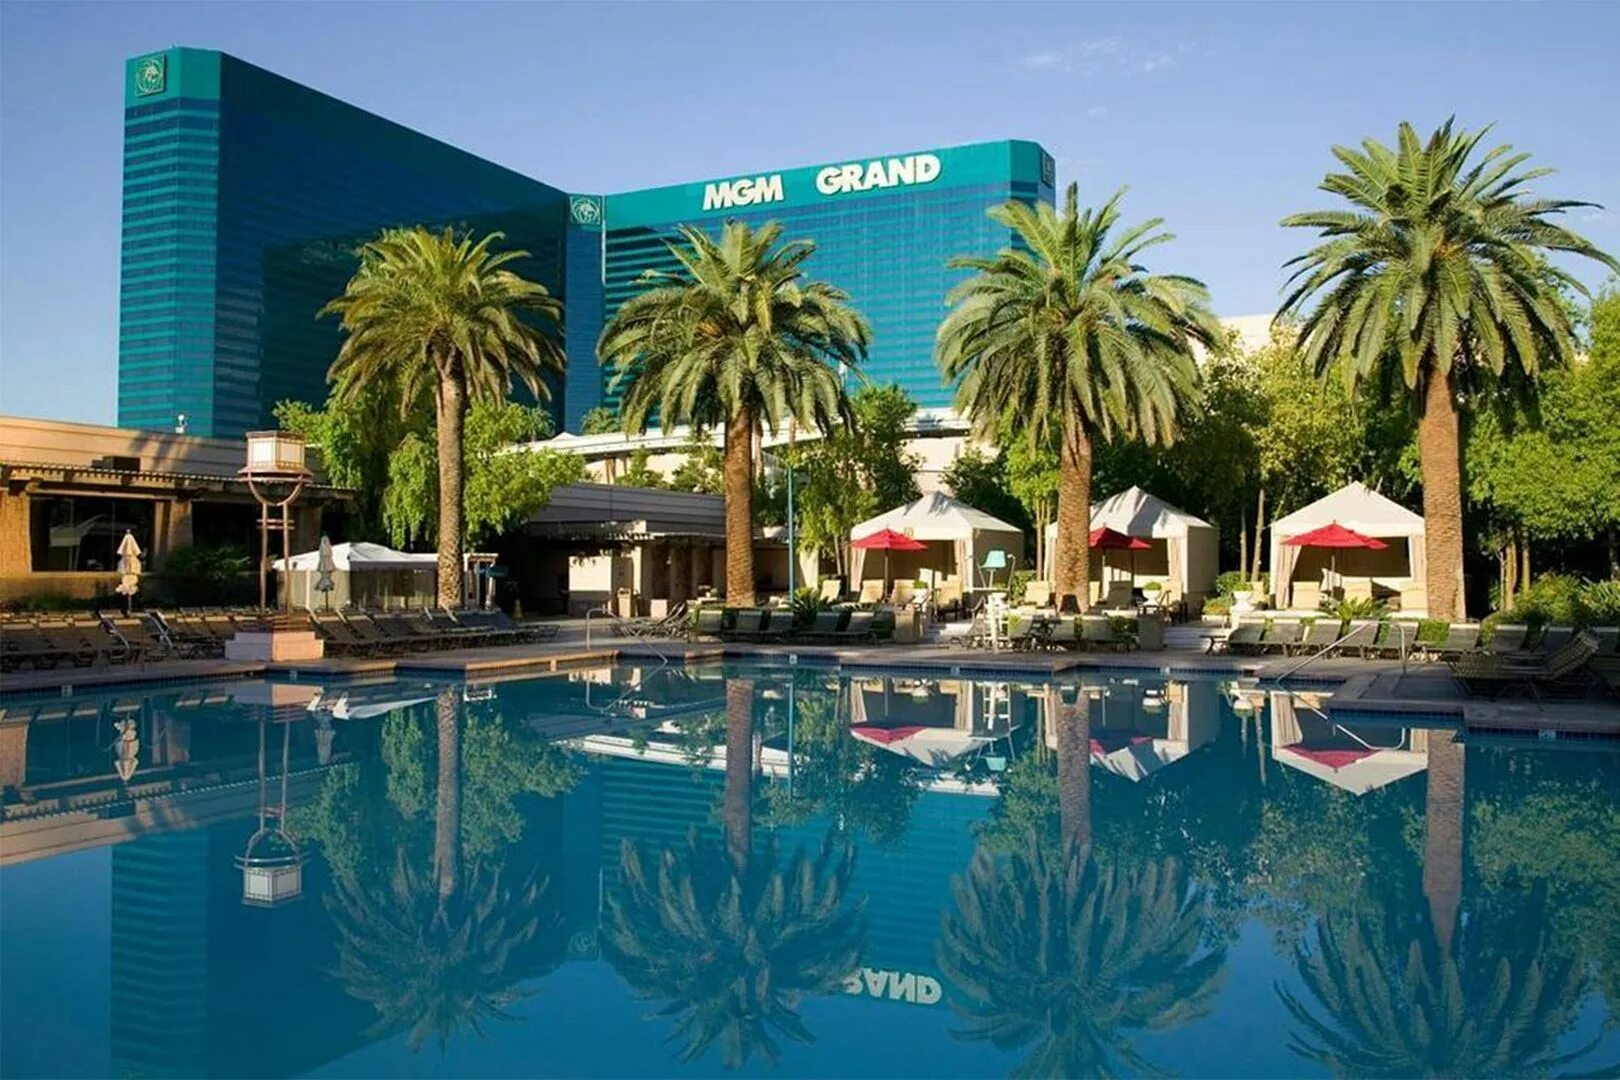 Vegas grand топ. Отель MGM Grand в Лас-Вегасе. Лас Вегас отель MGM. MGM Grand Hotel & Casino. Казино MGM Grand в Лас-Вегасе.